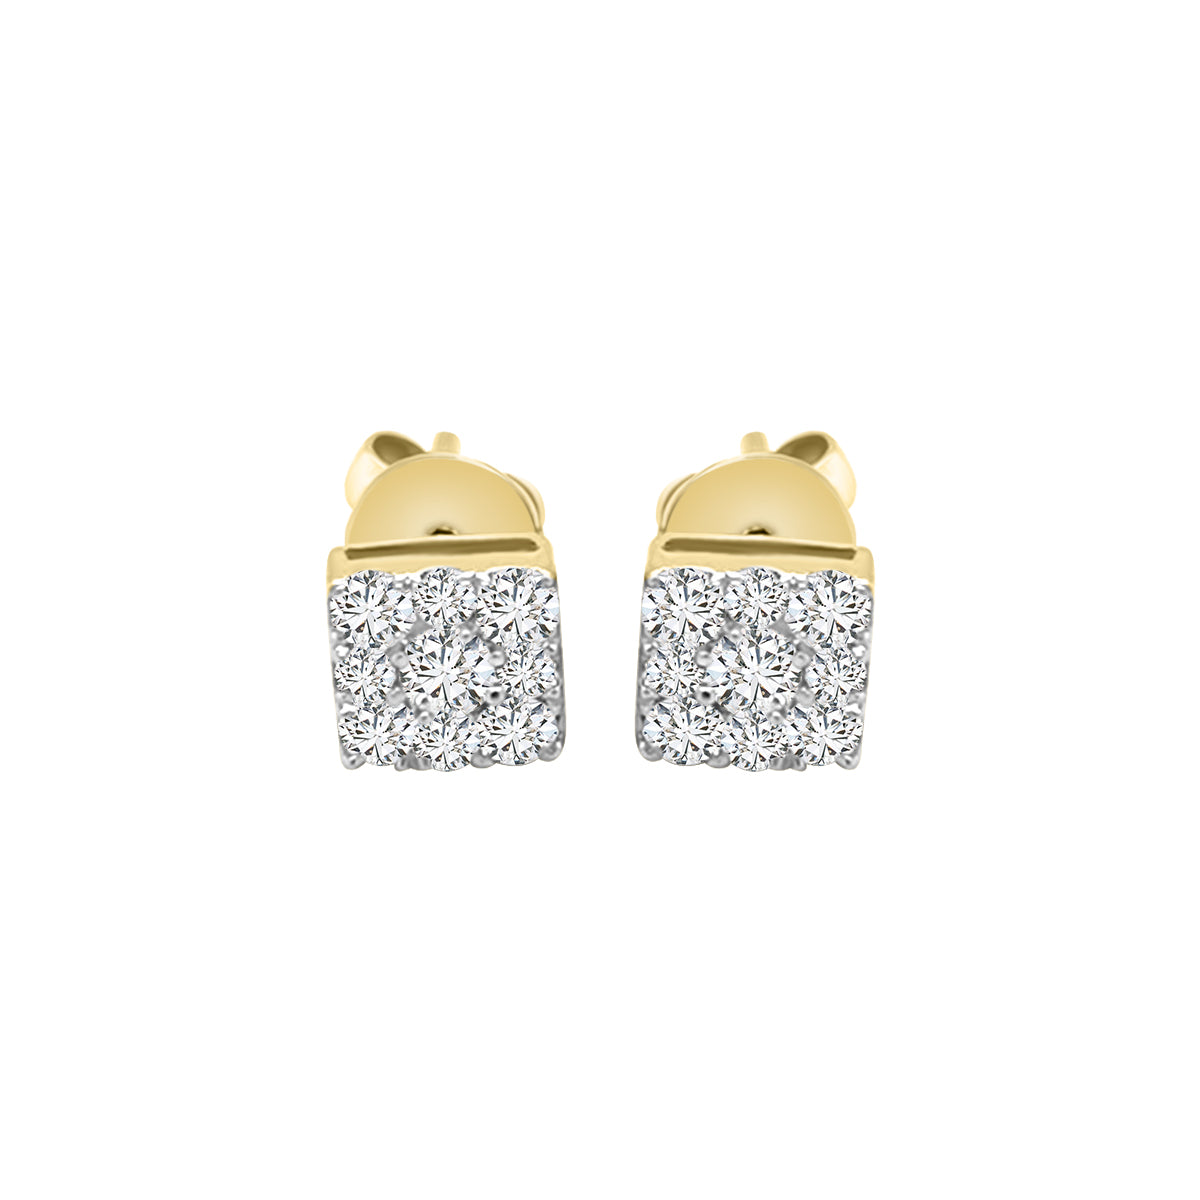 Cluster Set Diamond Earrings In 18k Yellow Gold.